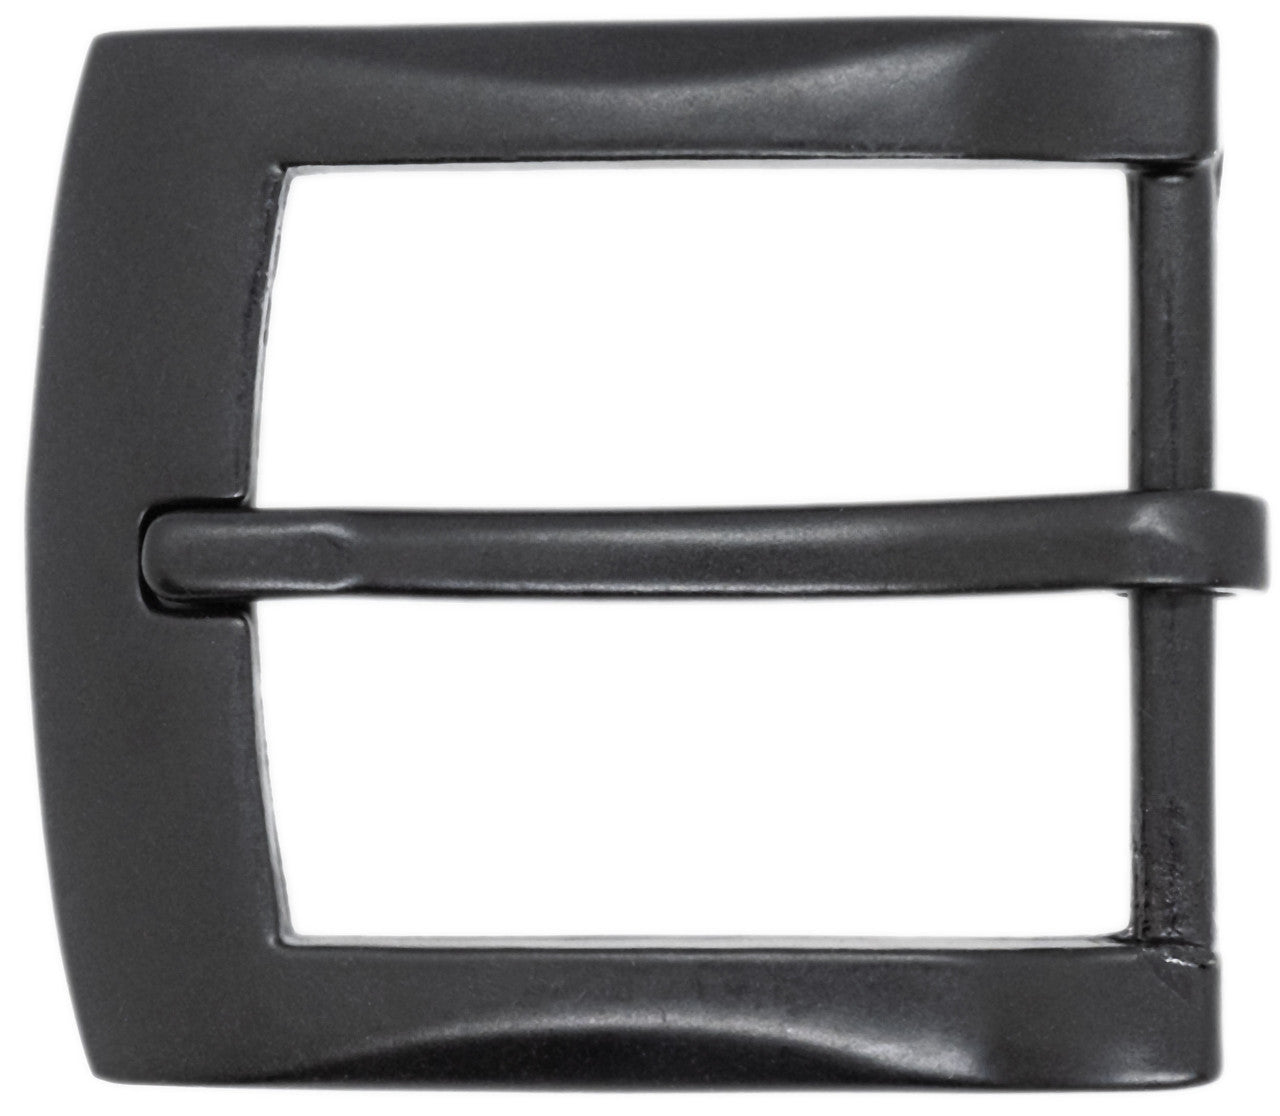 Full Grain Buffalo Solid Leather Belt Gloss Finish Black Buckle - Black - TBS3104-001